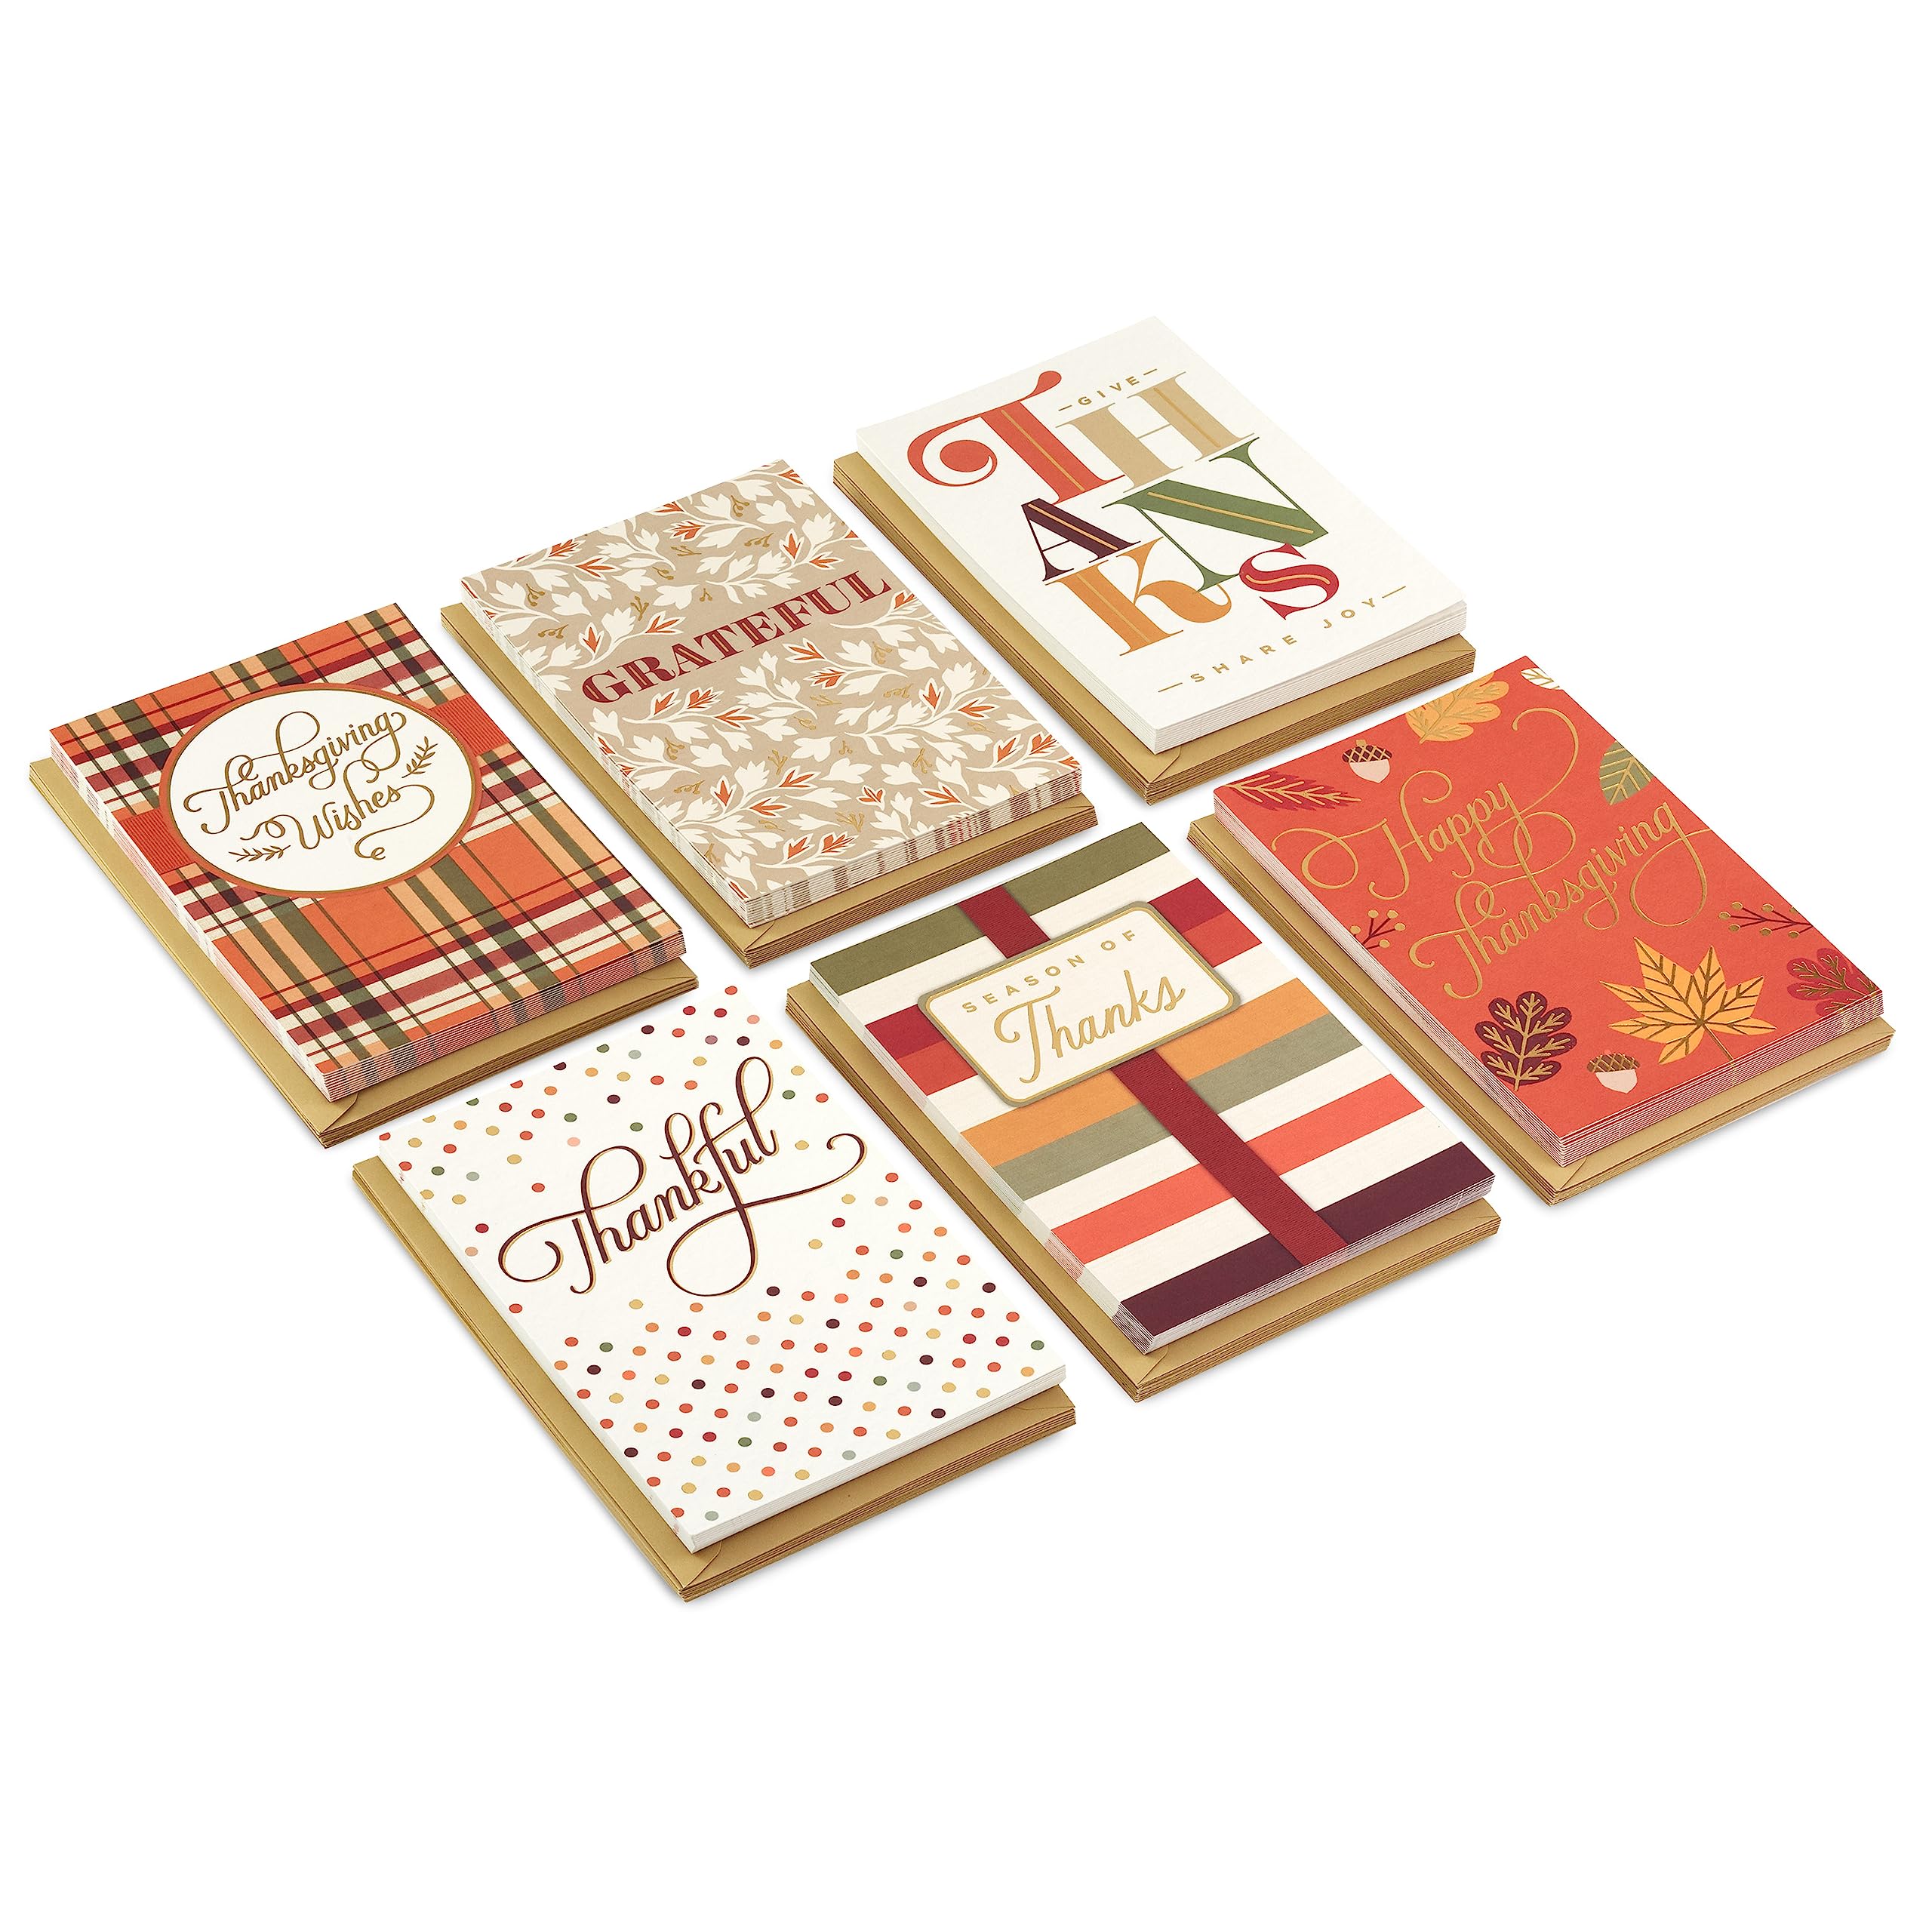 Hallmark Bulk Thanksgiving Cards Assortment (72 Cards with Envelopes) Stripes, Leaves, Plaid